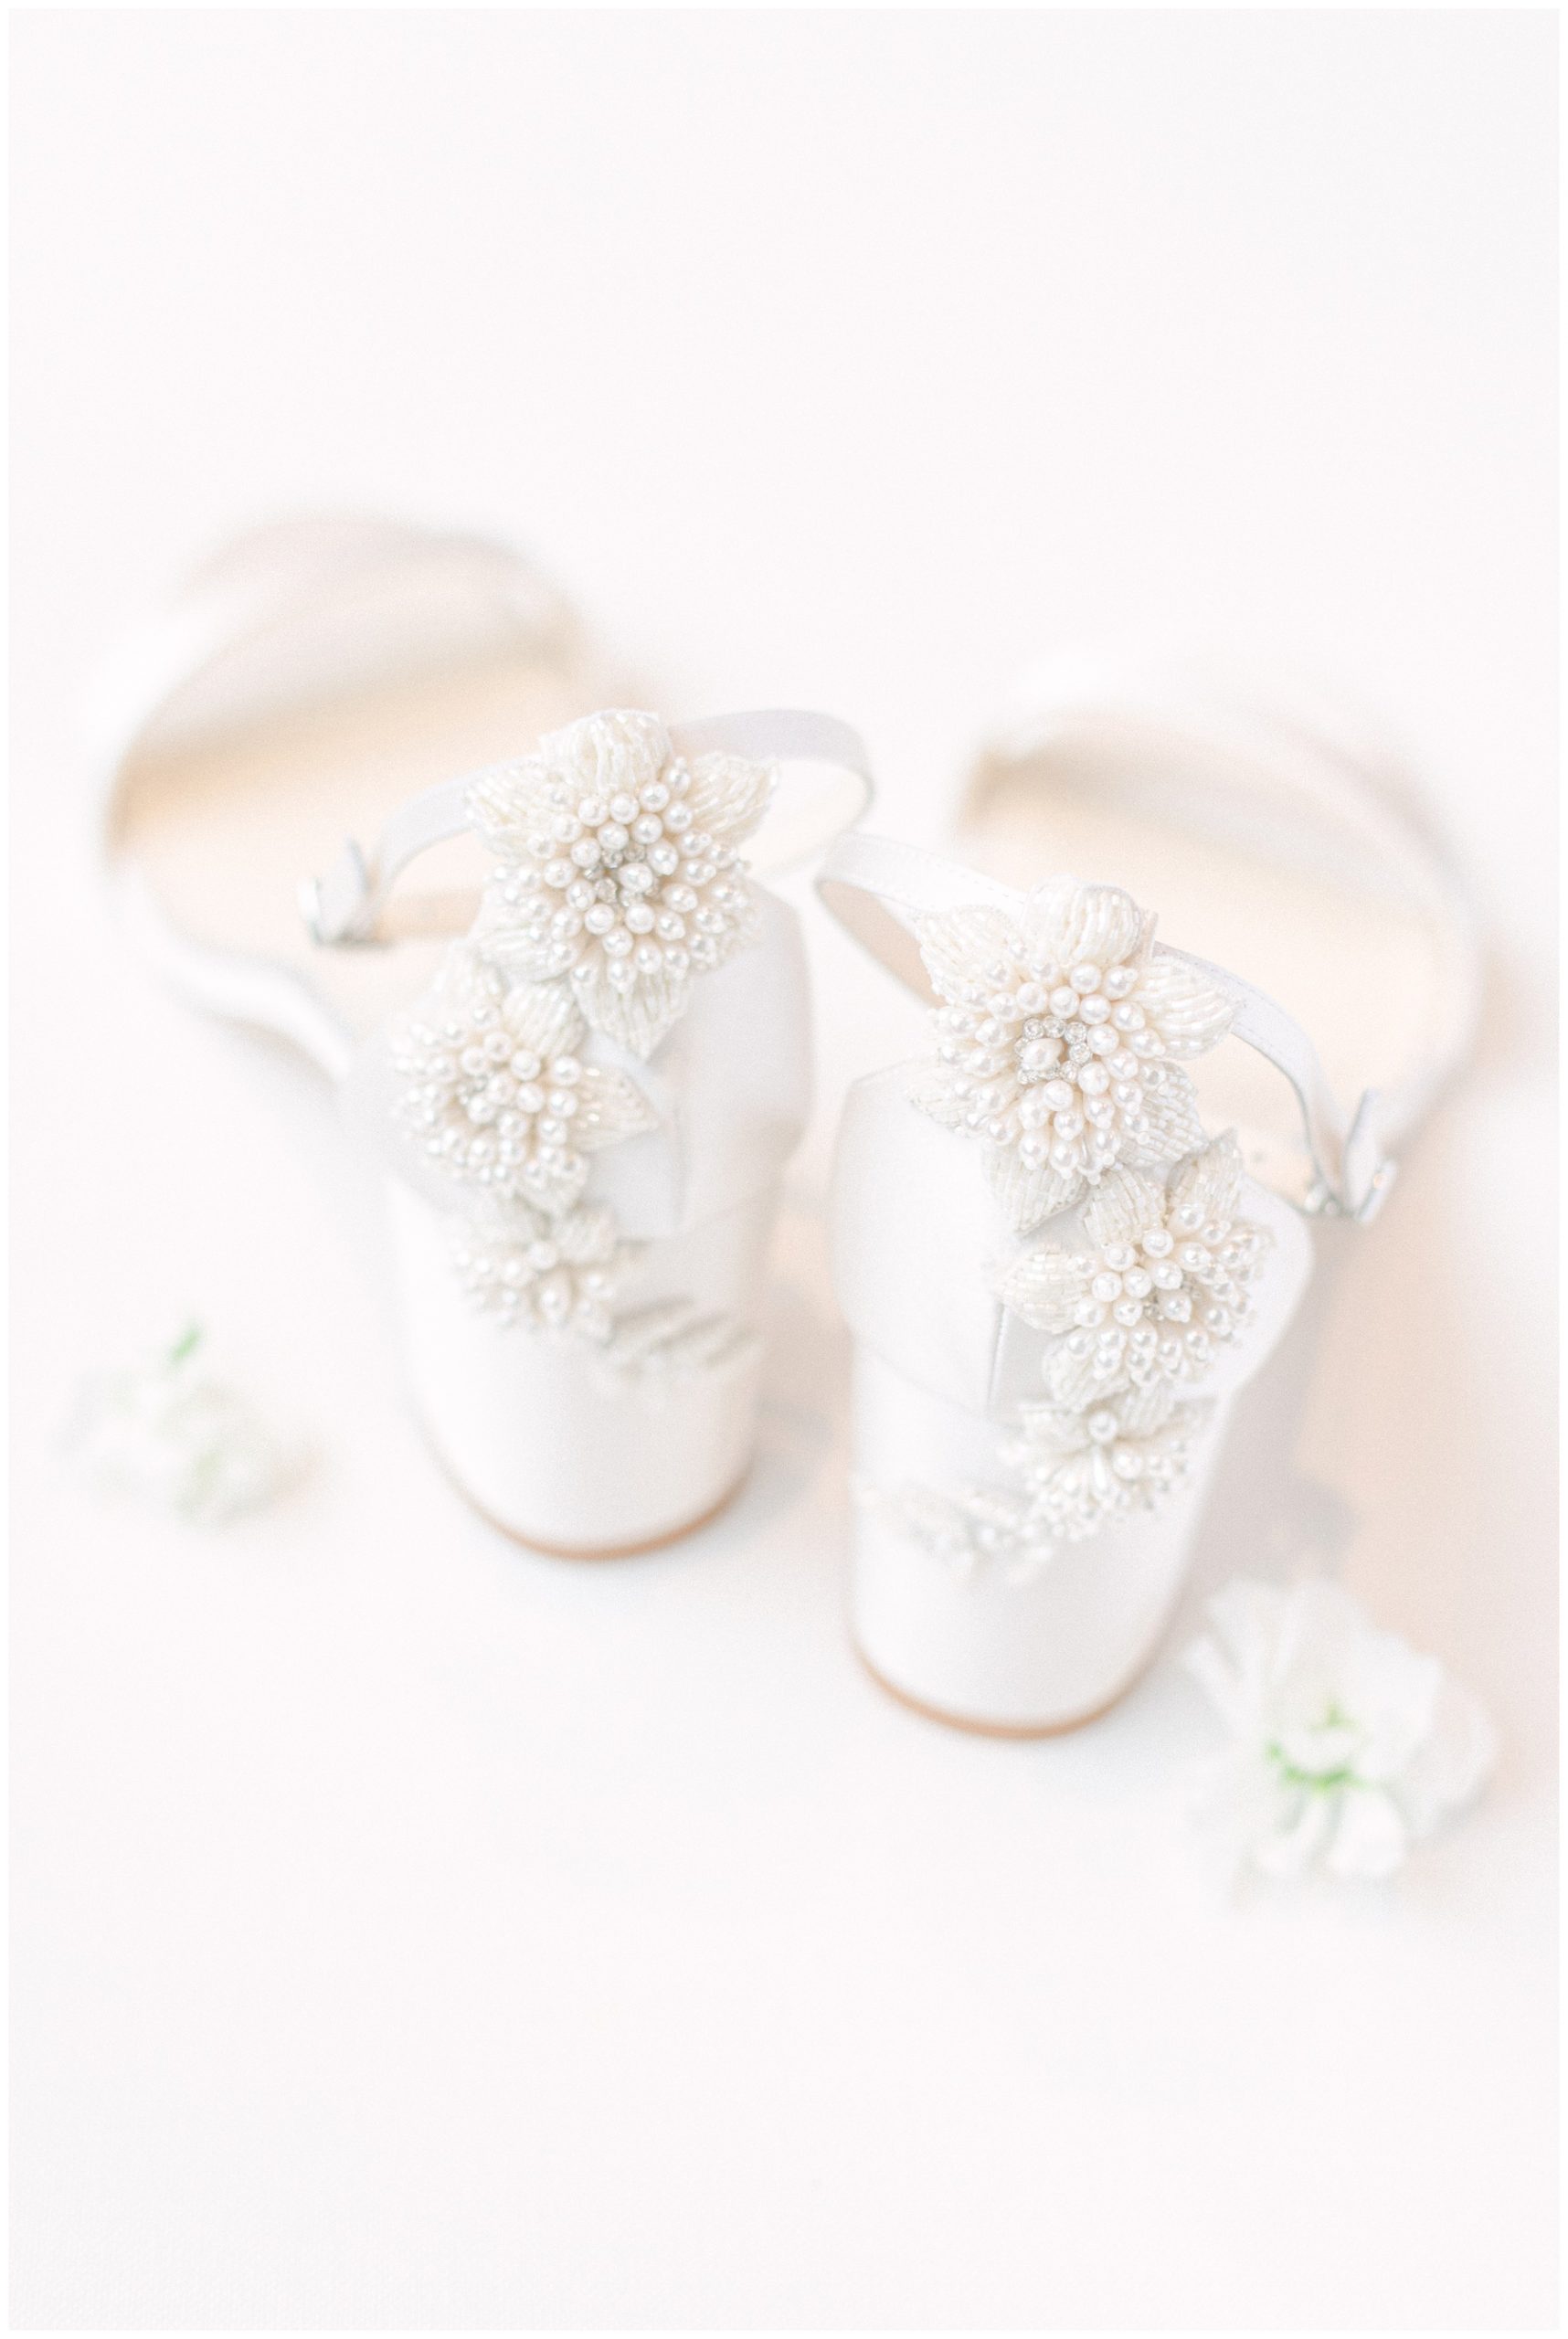 Bella Belle FABIOLA 3D Floral Pearls And Ivory Wedding Block Heel